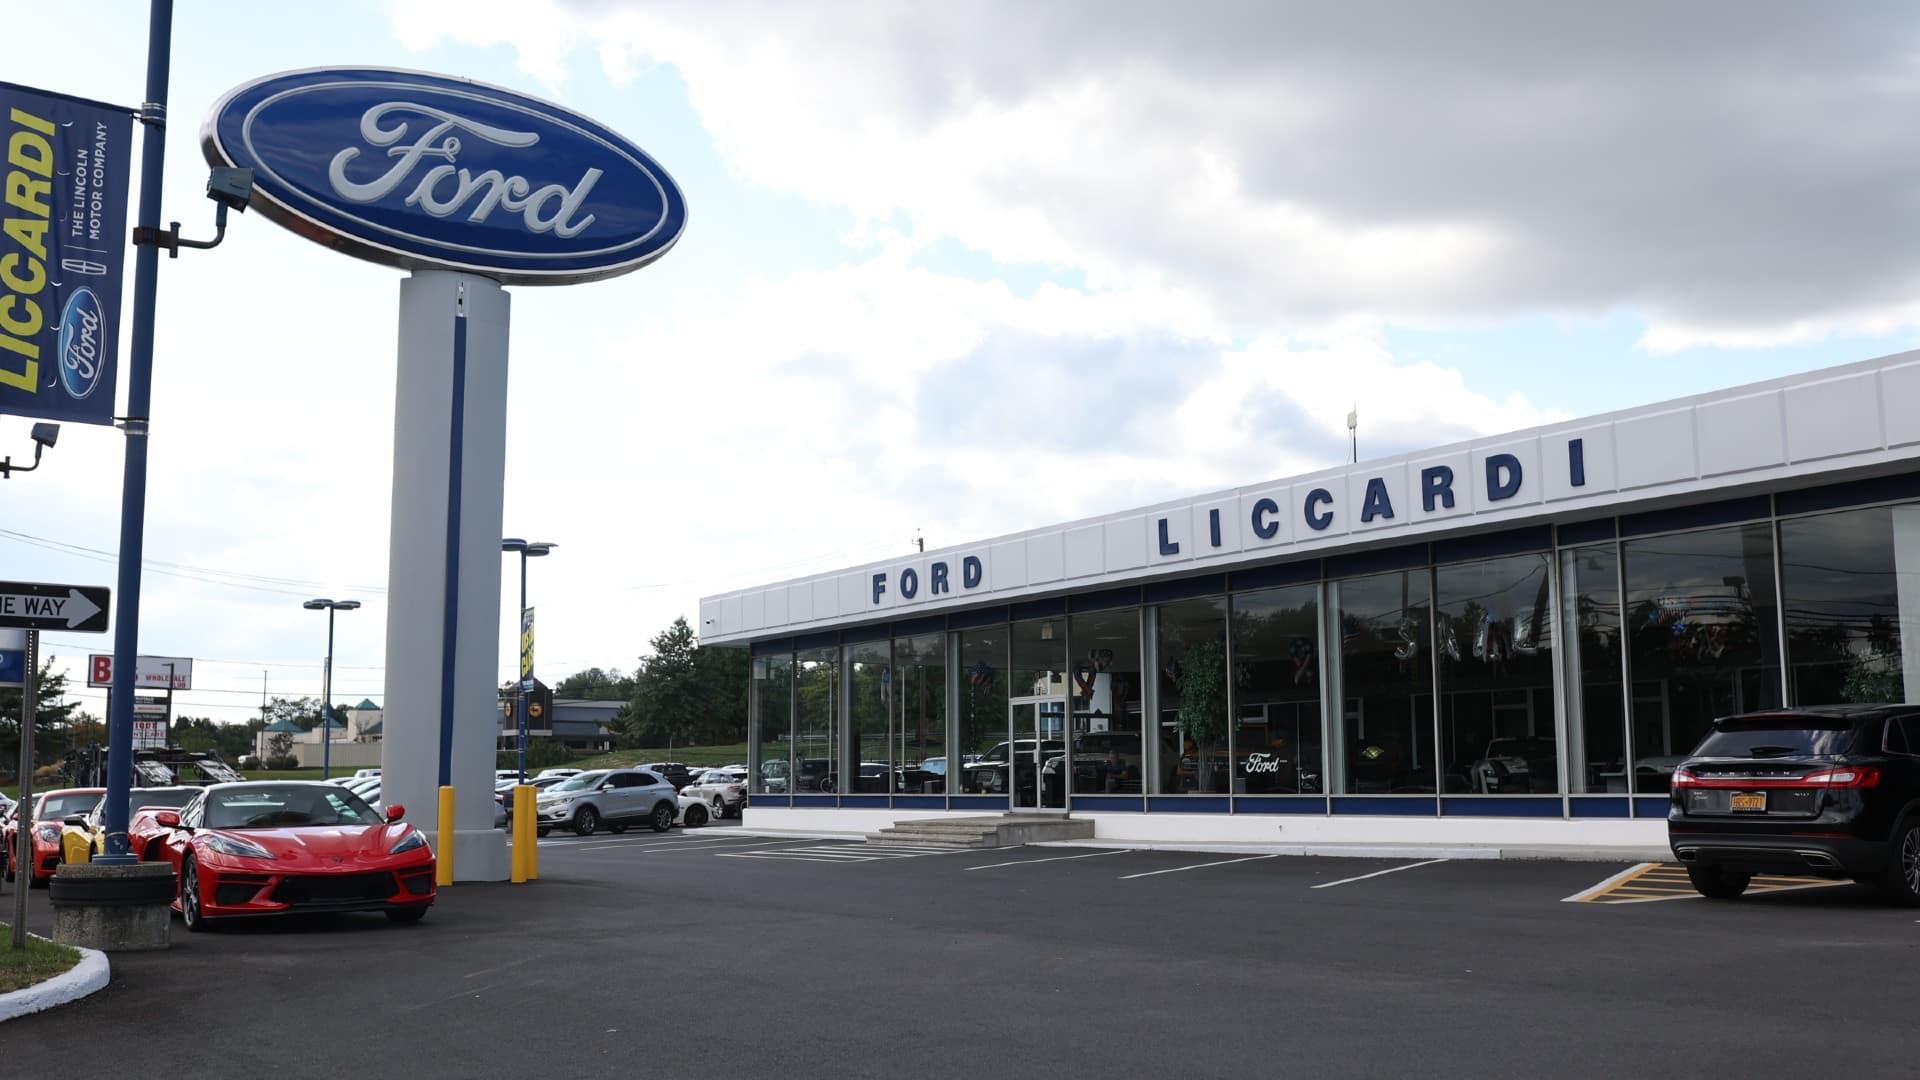 Liccardi Ford Dealership